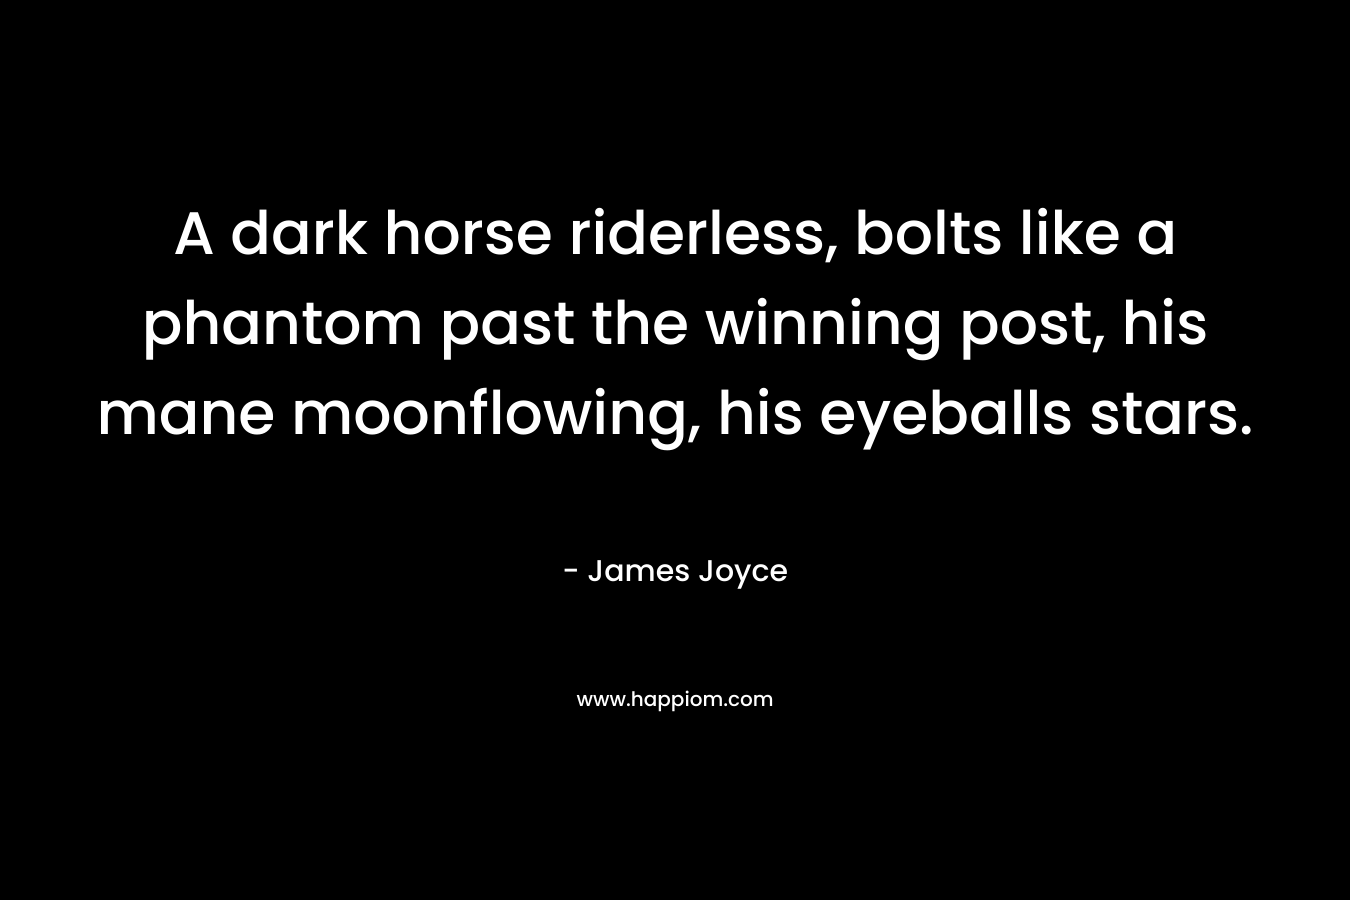 A dark horse riderless, bolts like a phantom past the winning post, his mane moonflowing, his eyeballs stars. – James Joyce